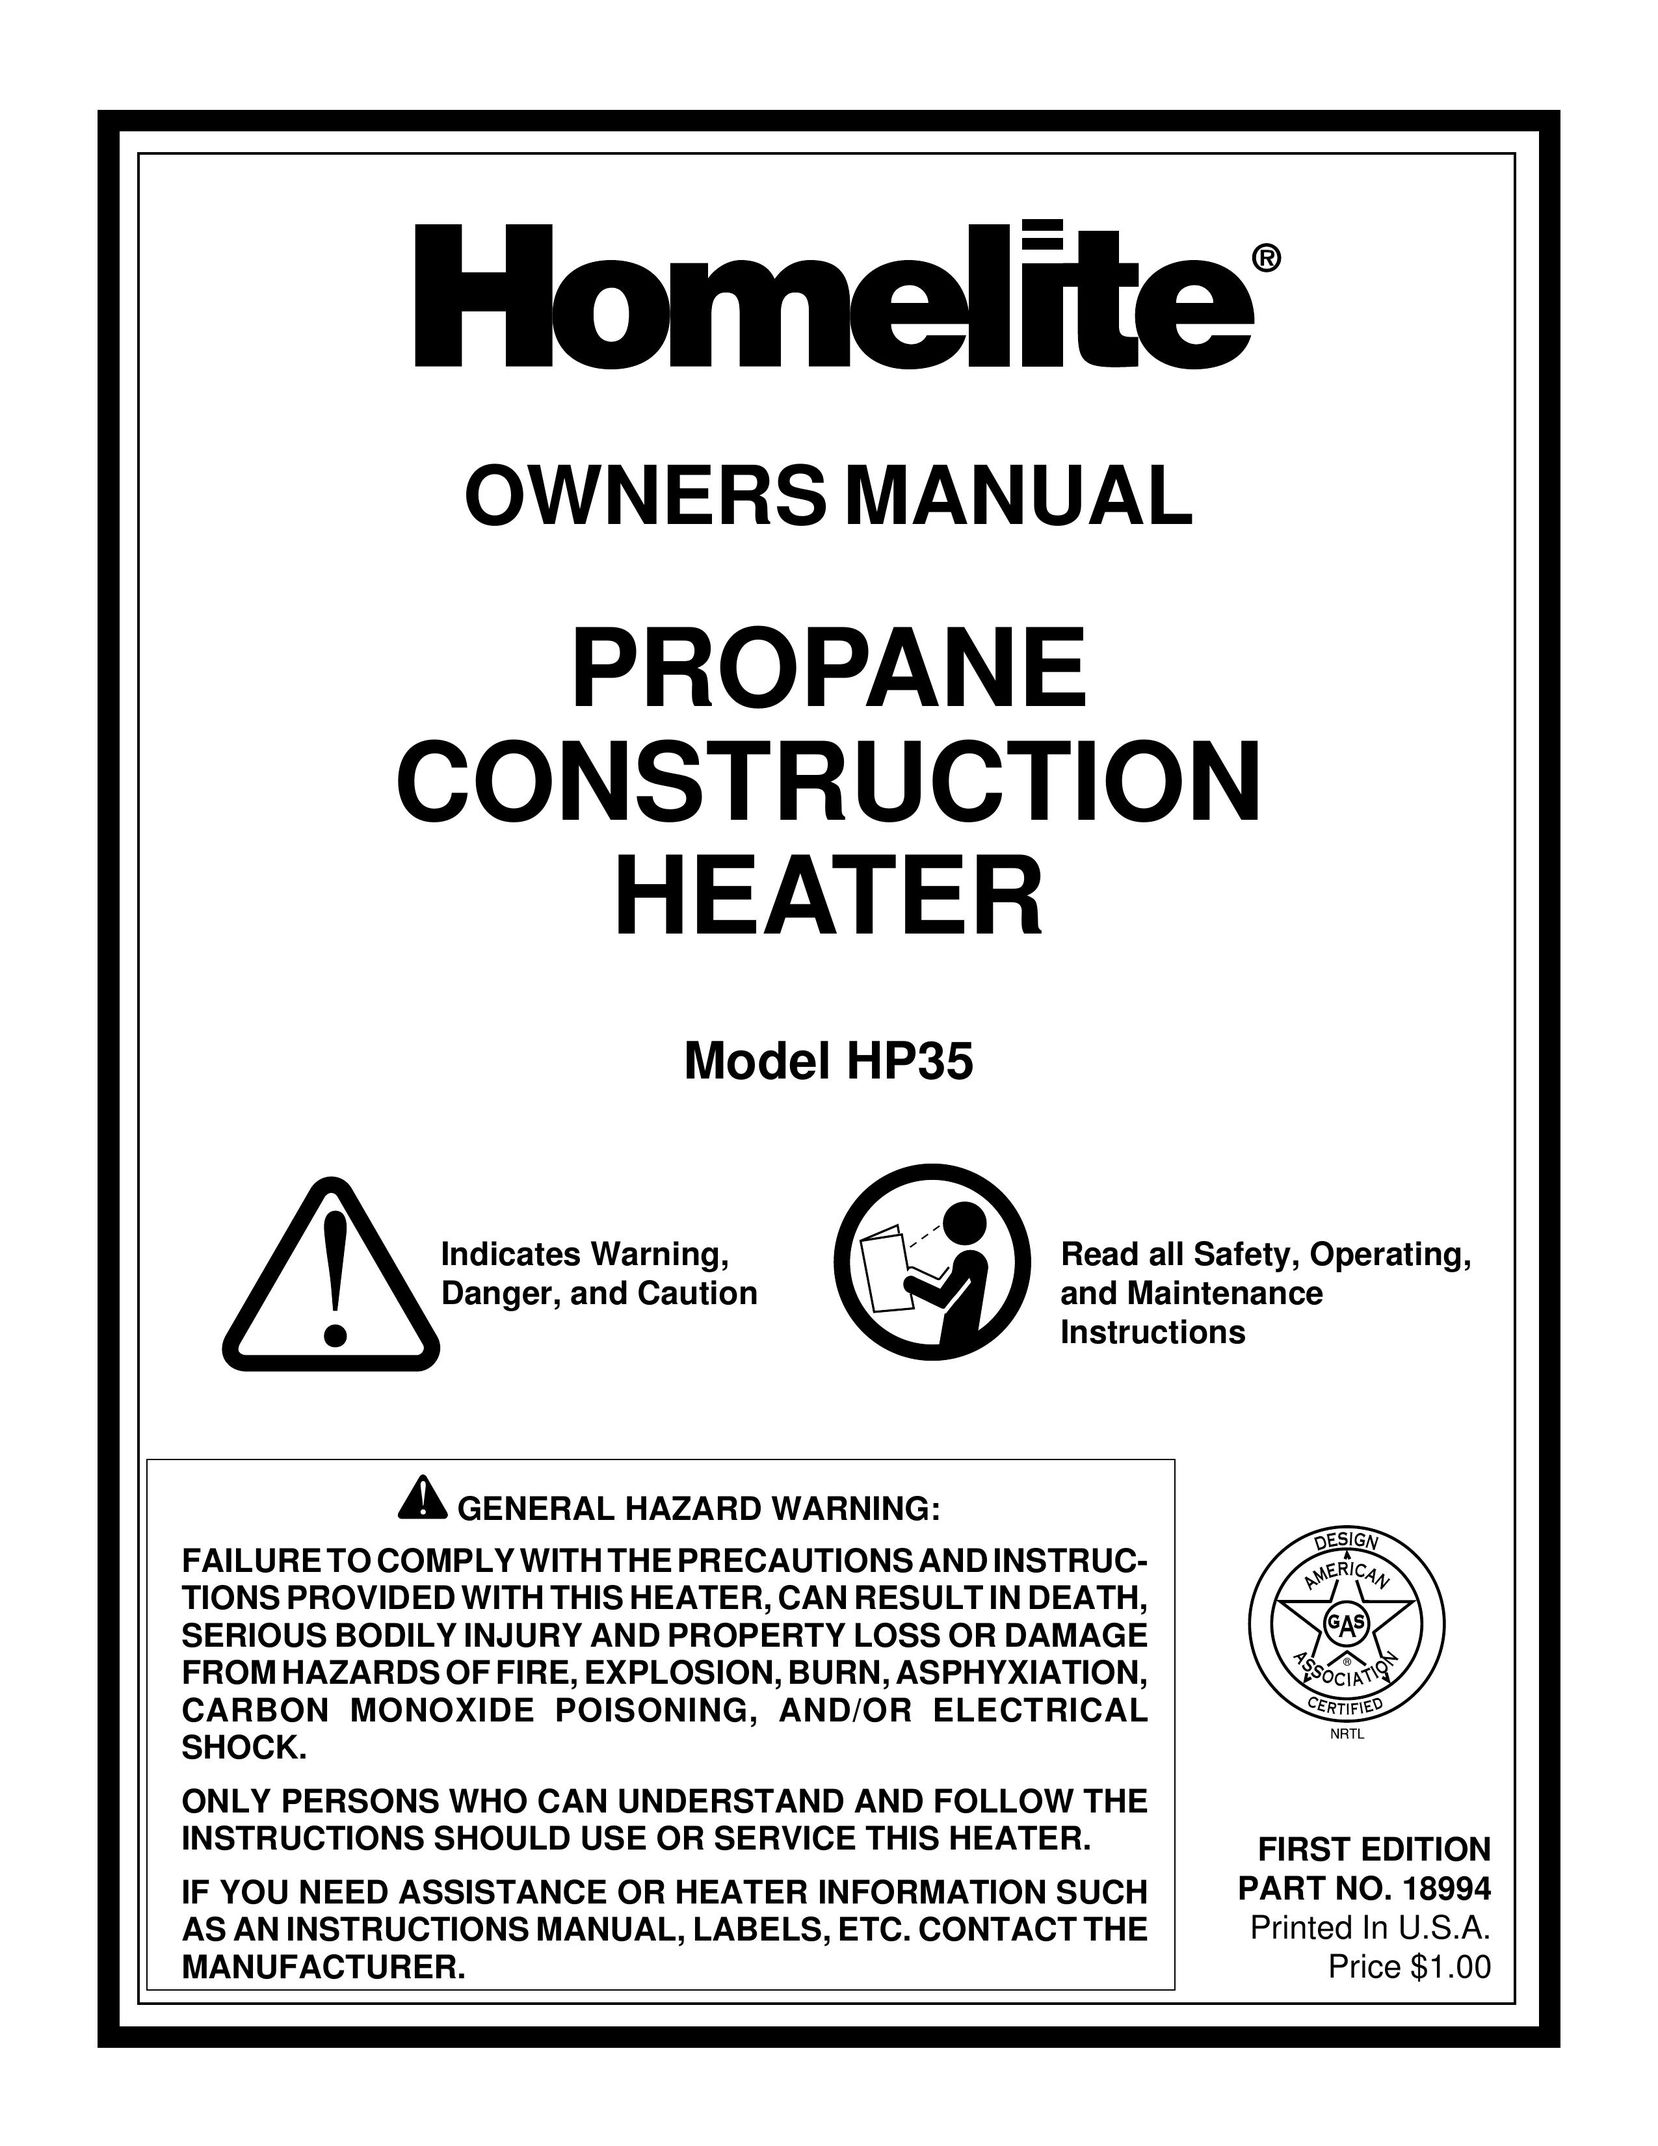 Homelite HP35 Electric Heater User Manual